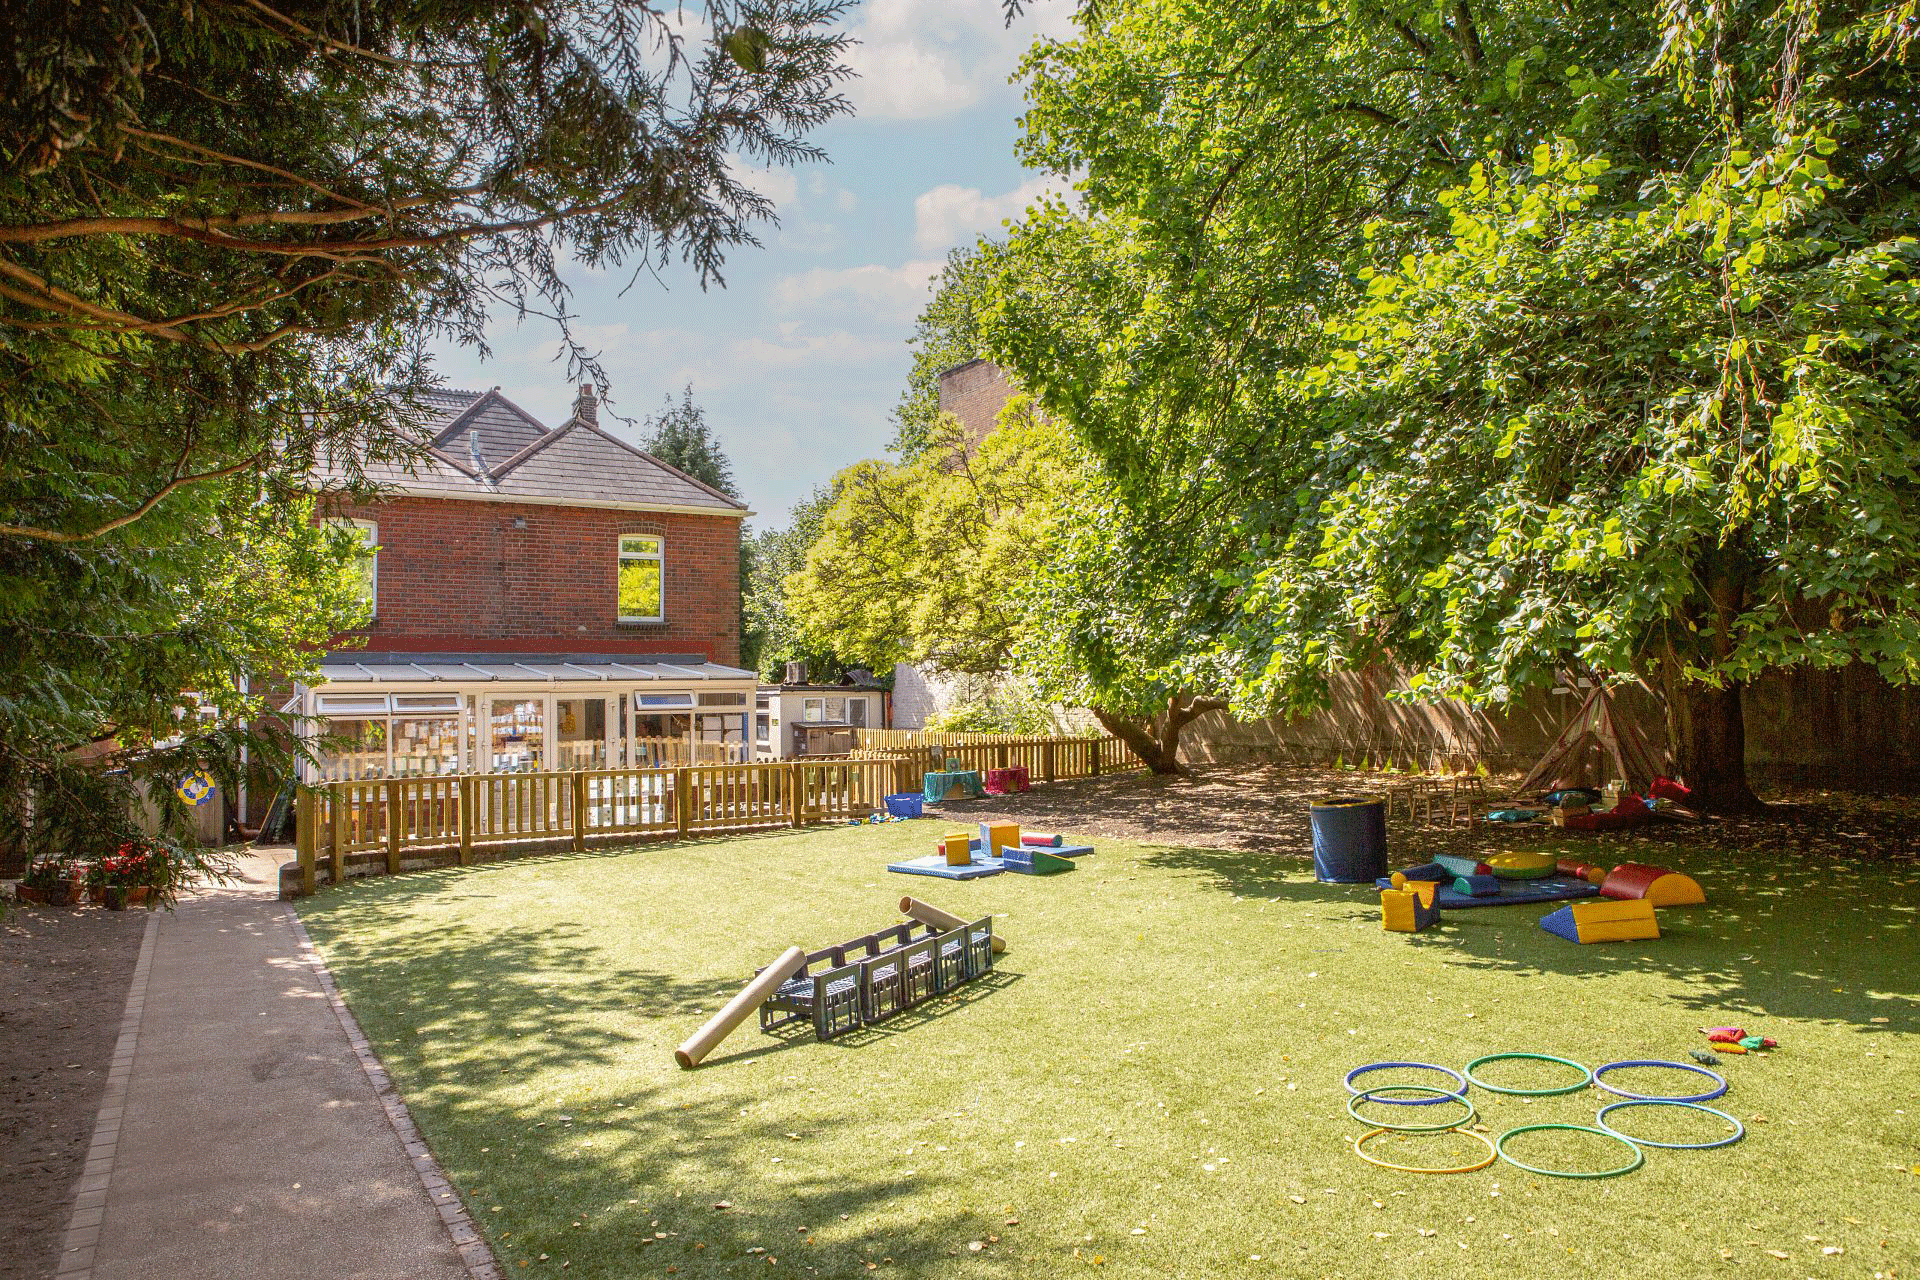 Bright Horizons Portwood Day Nursery and Preschool - large garden